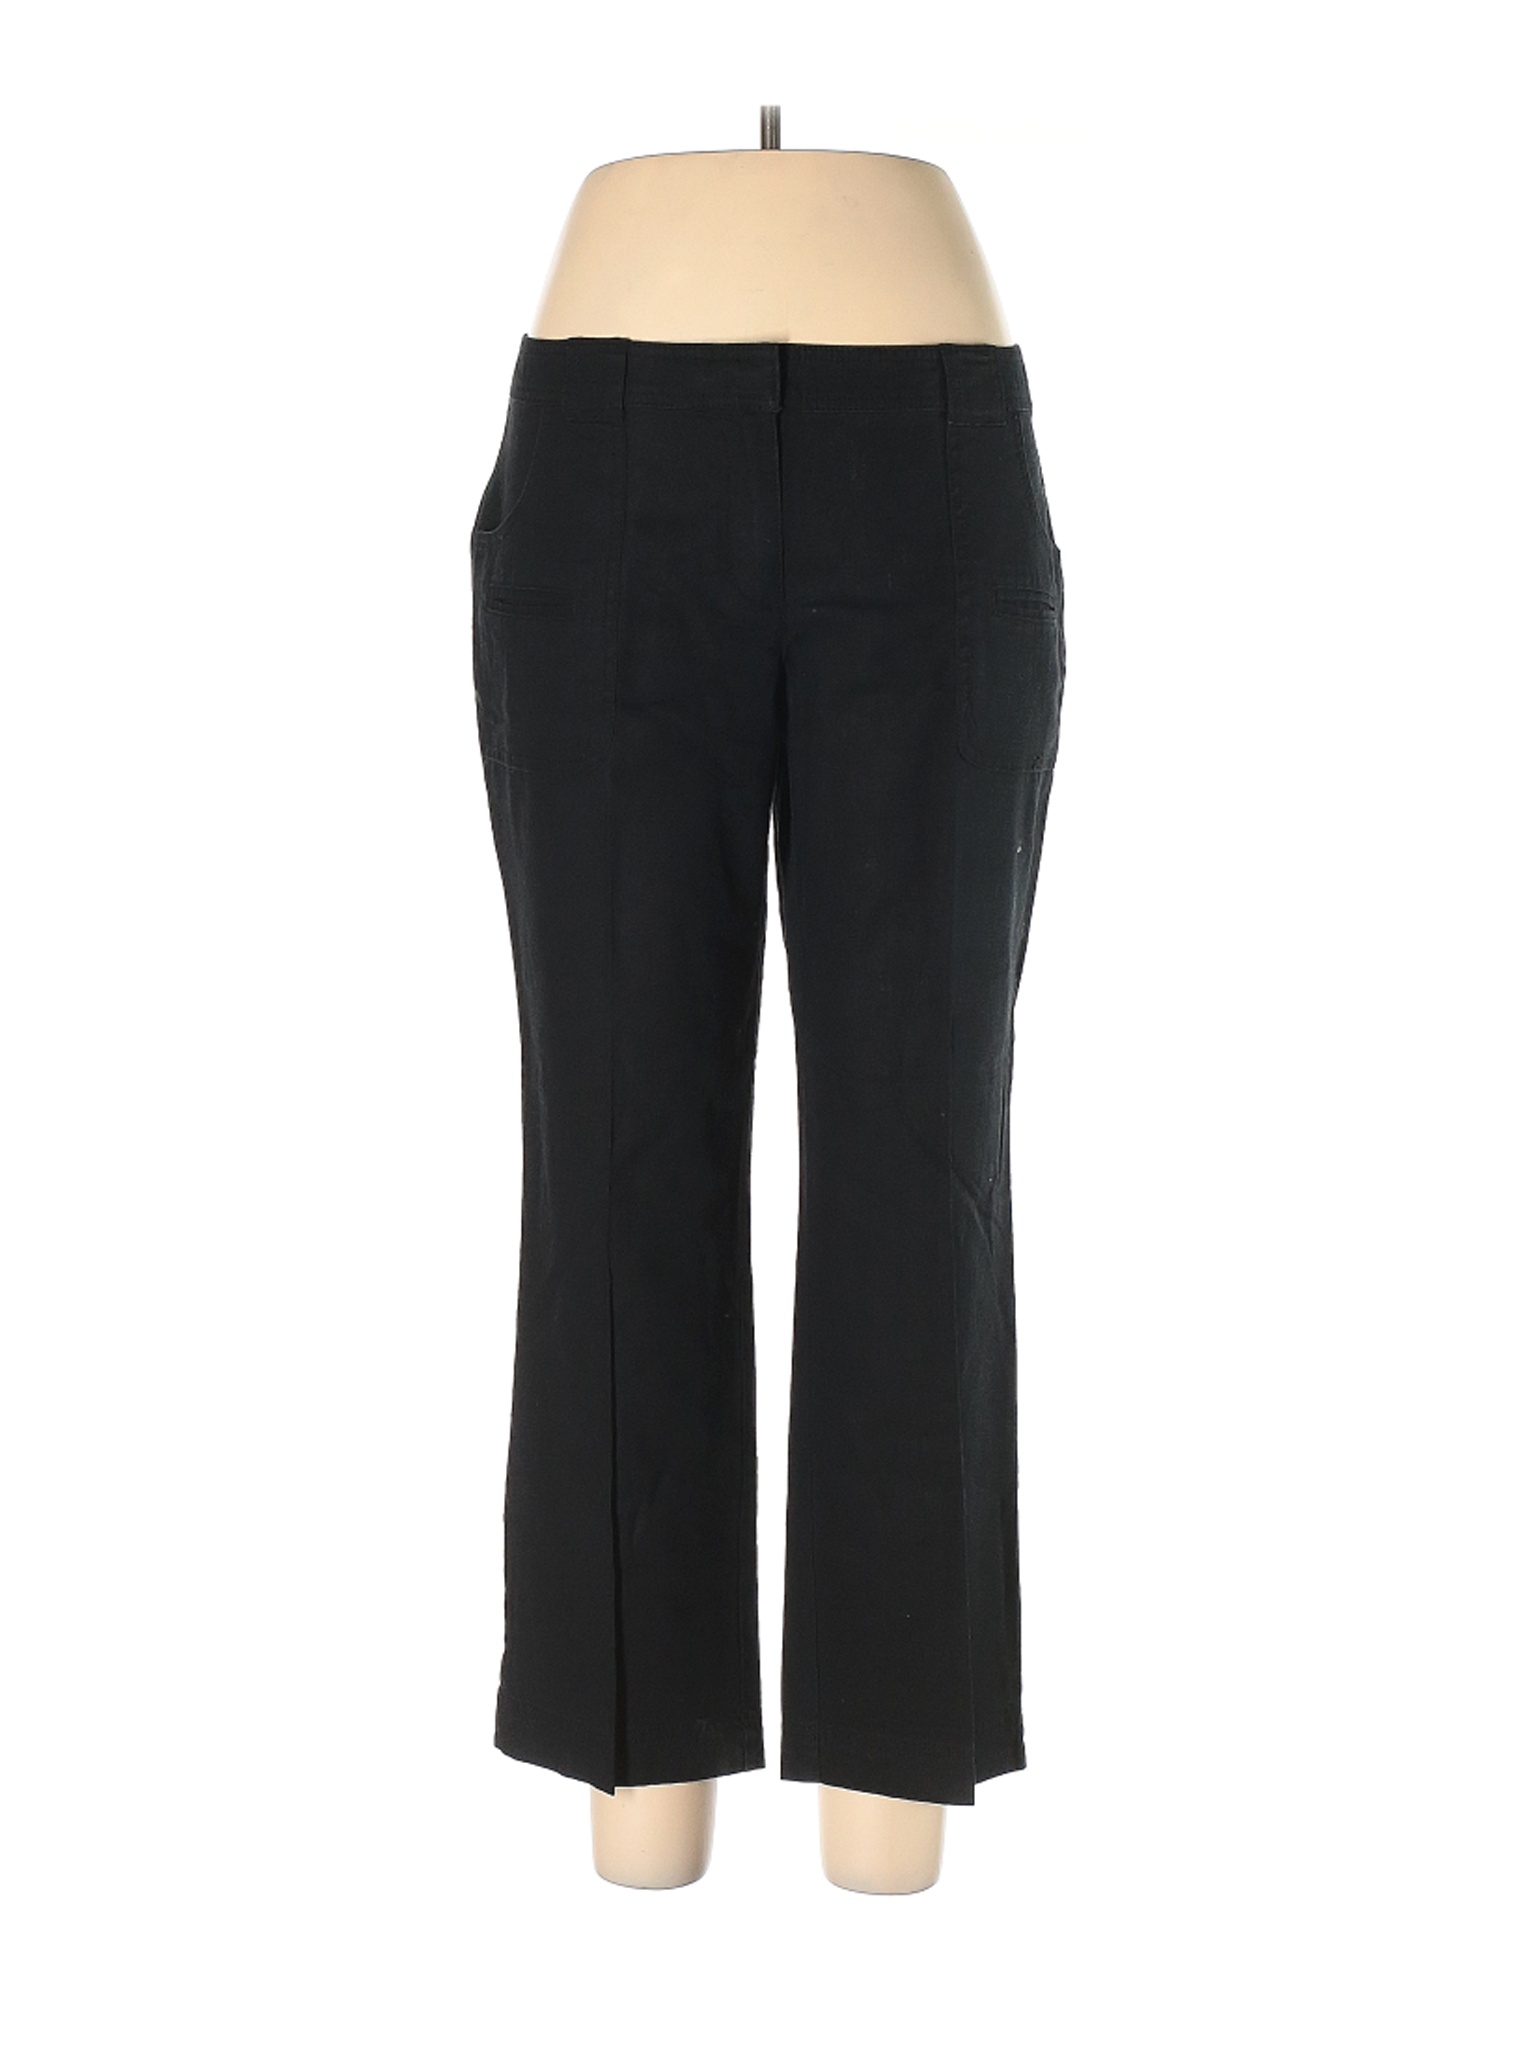 New York & Company Women Black Linen Pants 10 | eBay